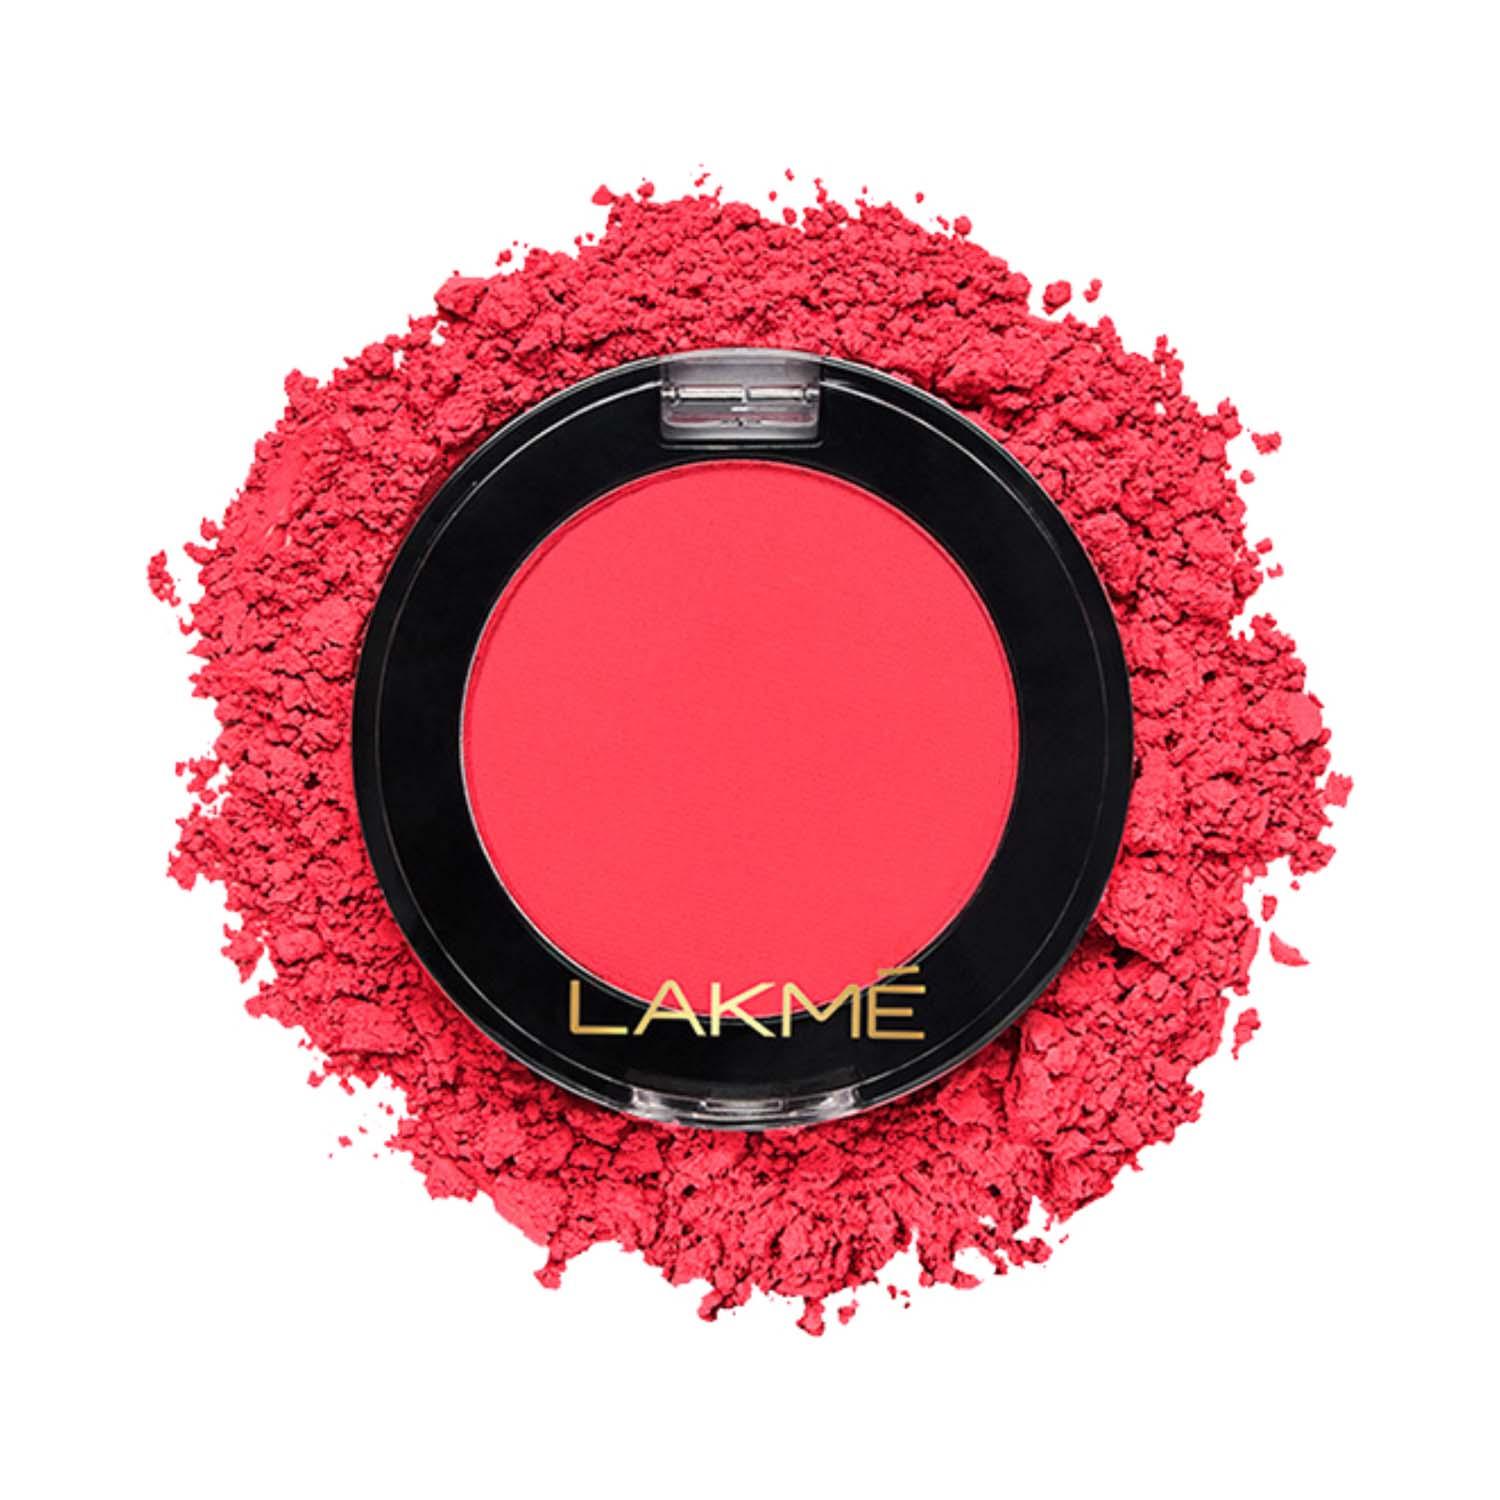 Lakme | Lakme Face It Blush - B1 Natural Rose (4g)